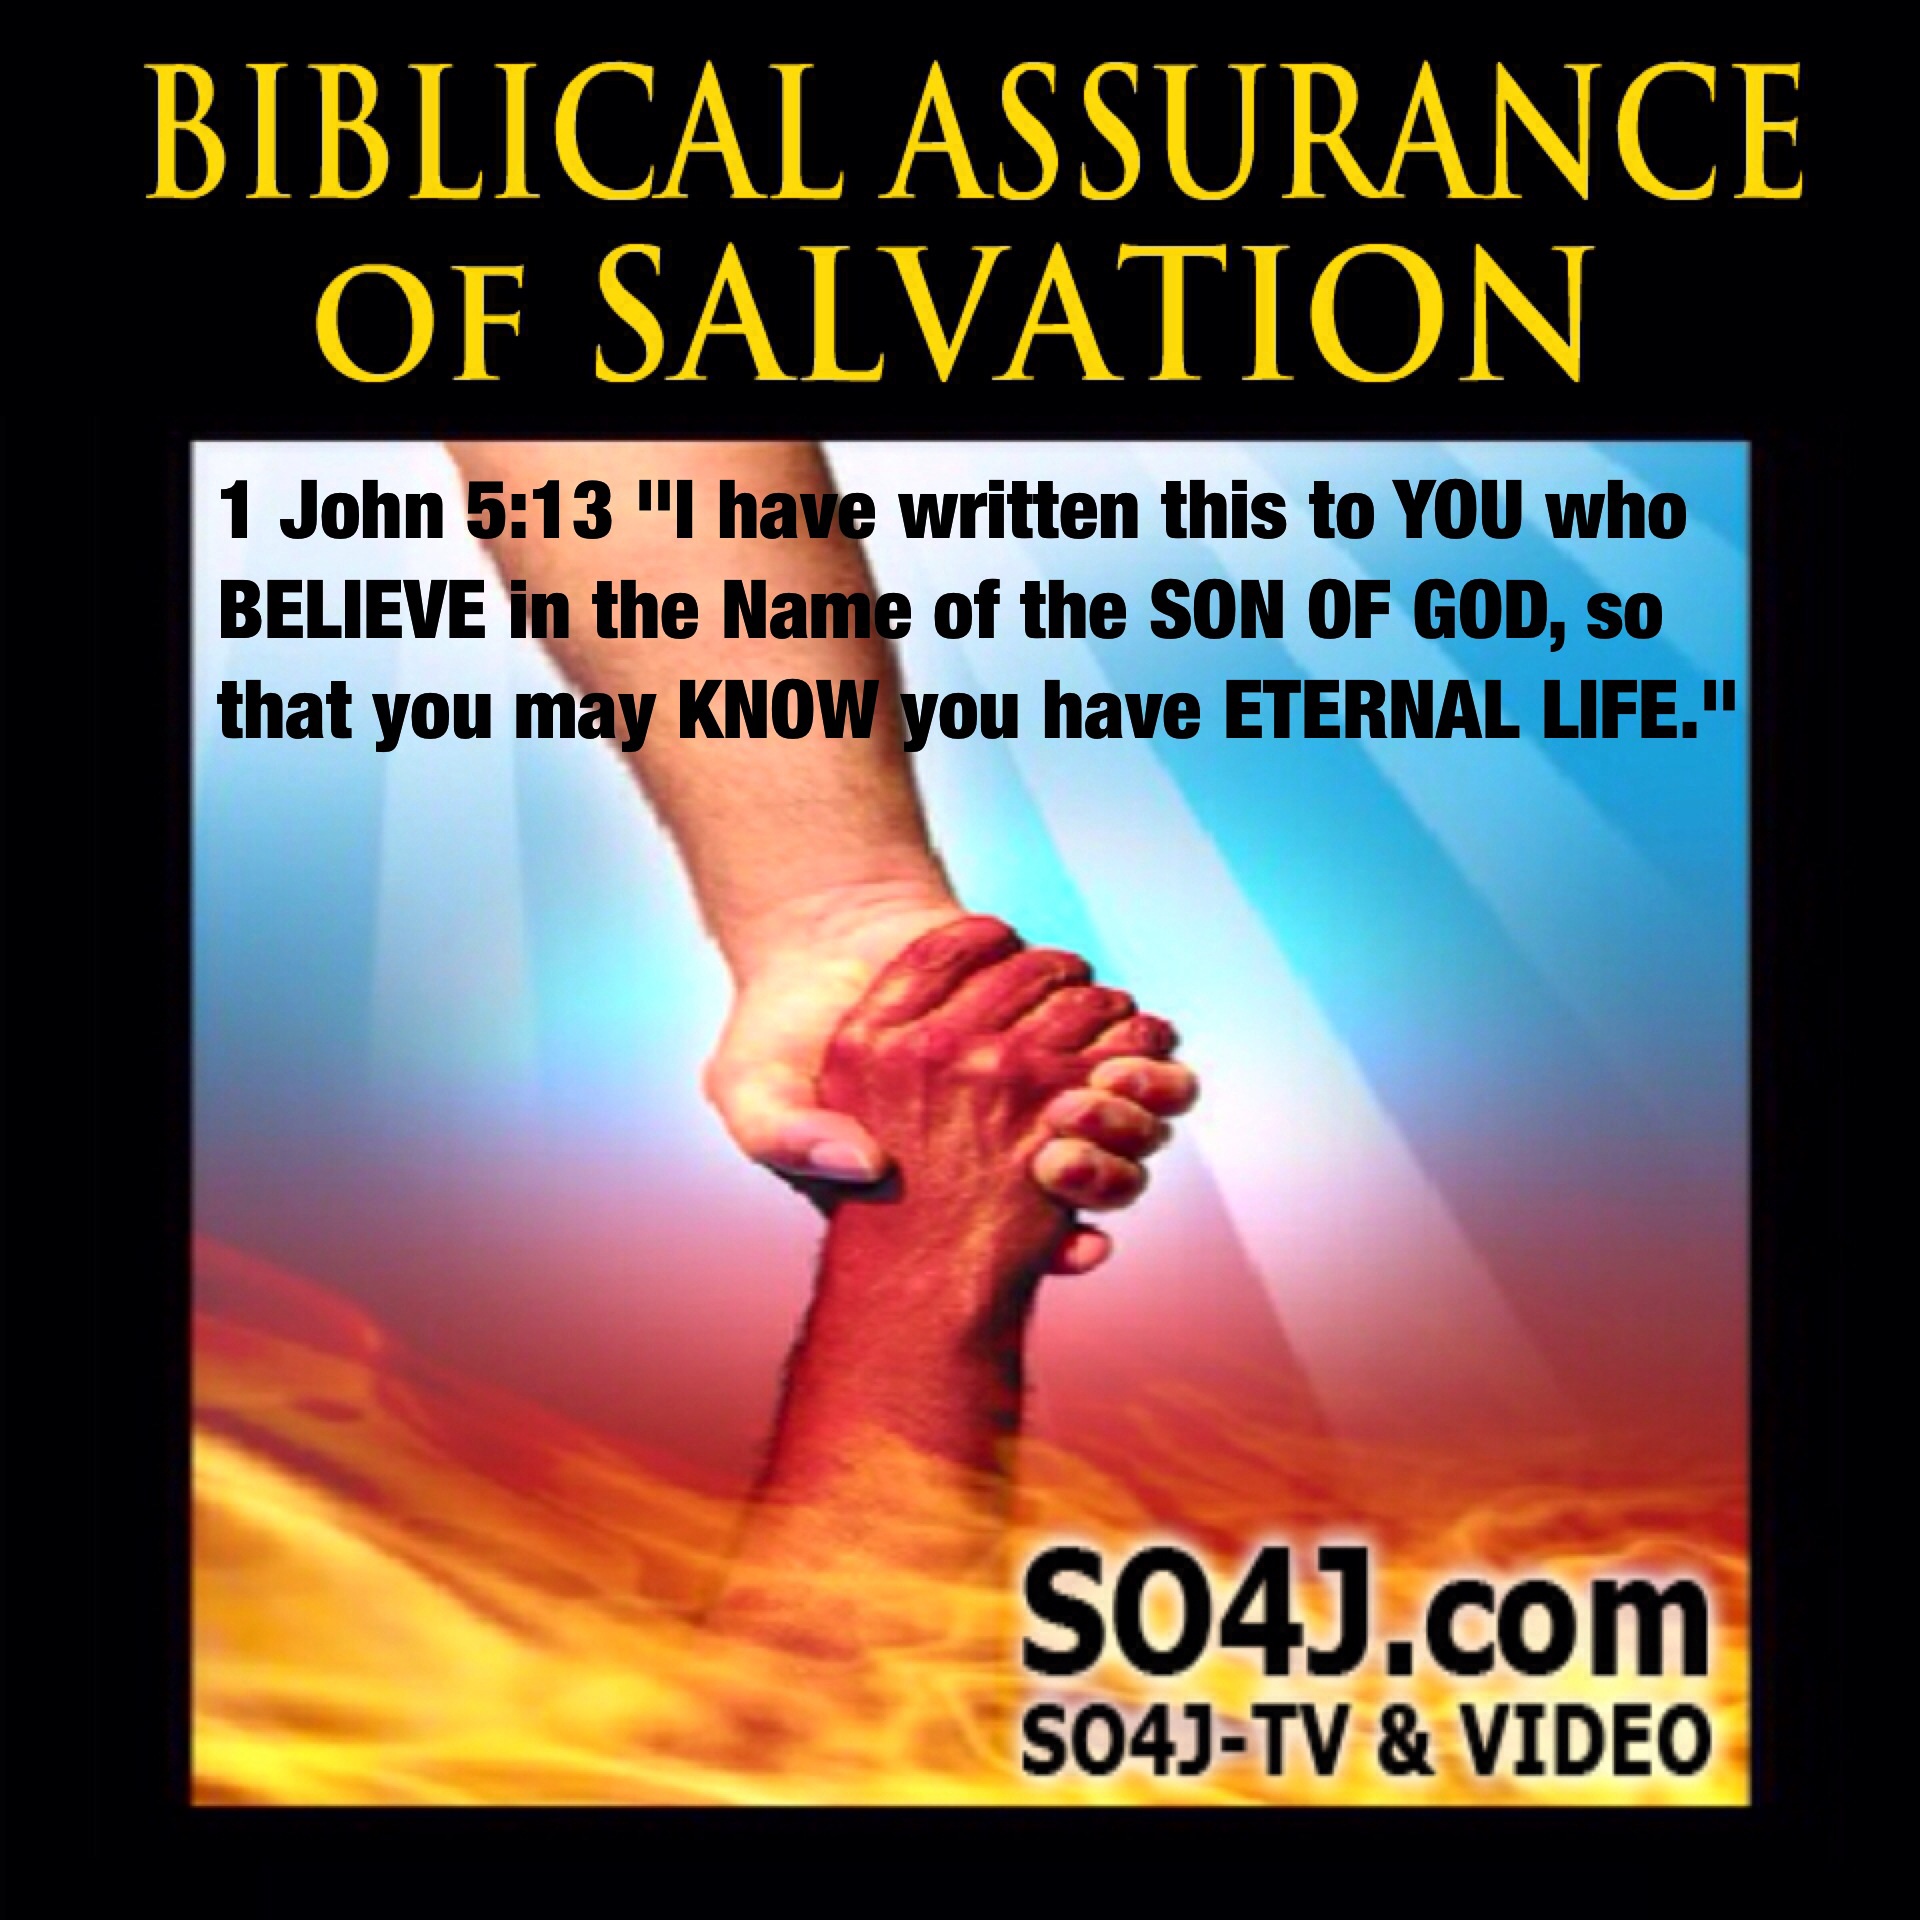 Biblical Assurance of Salvation - SO4J-TV & Video - SO4J.com